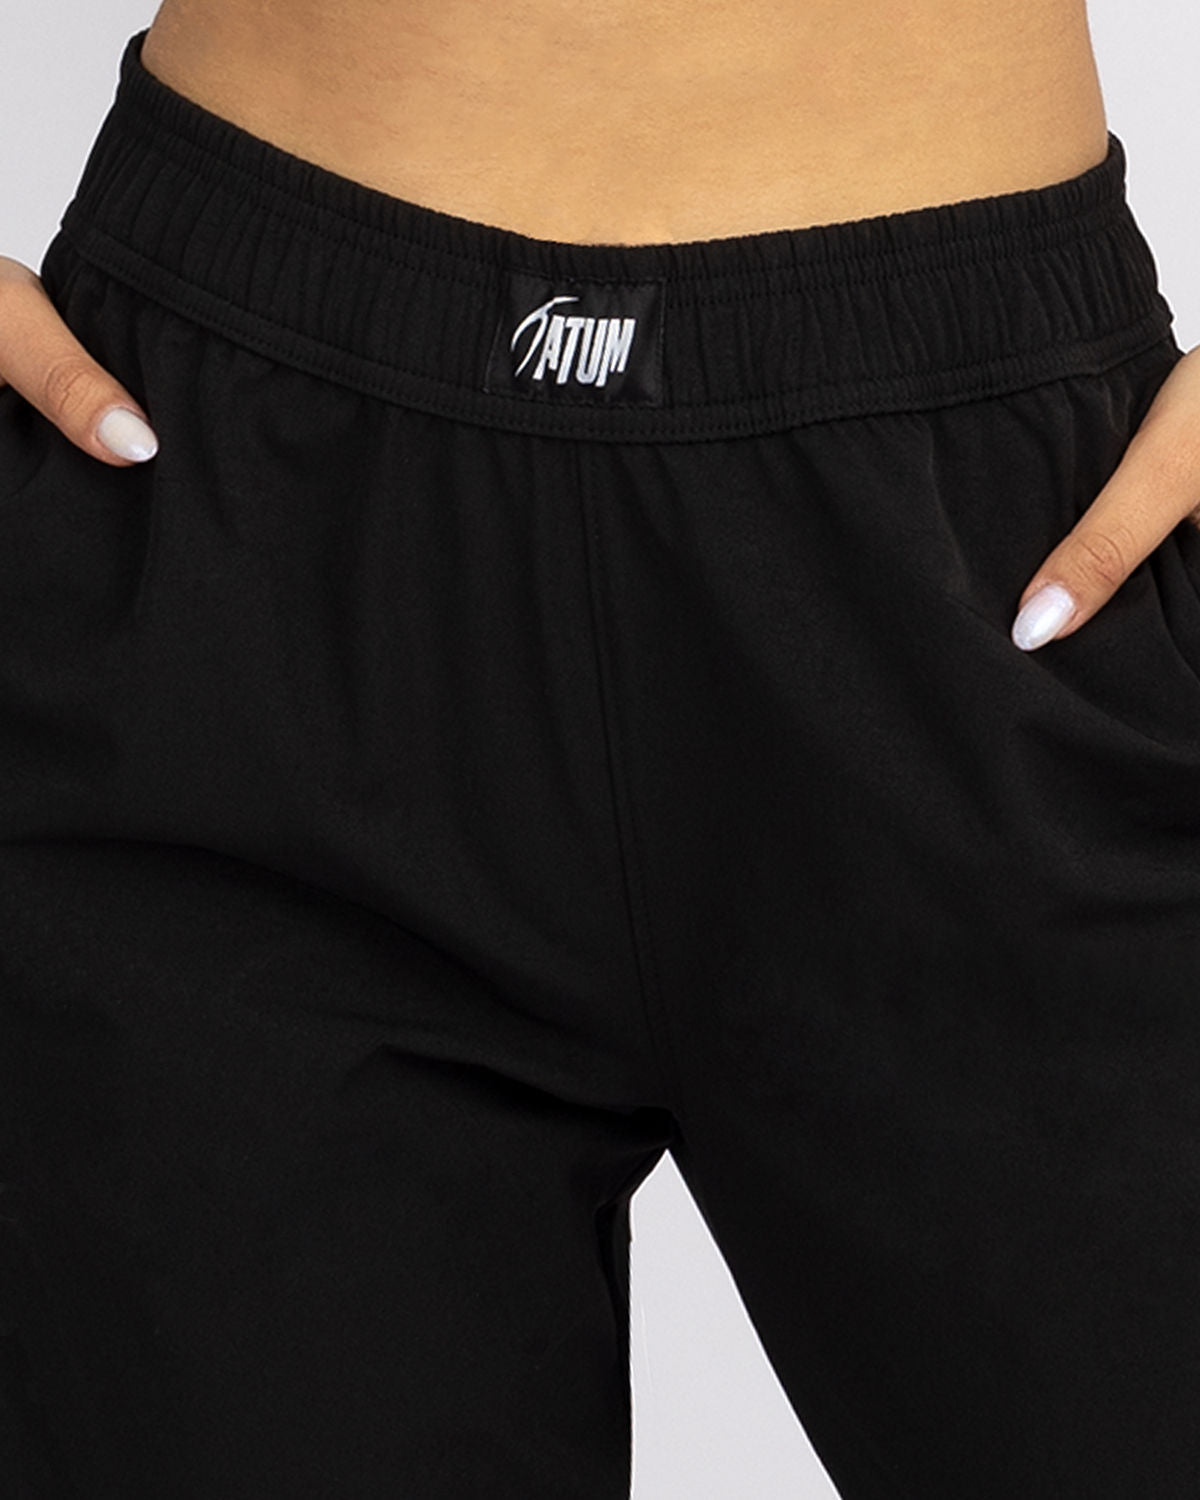 Sports Slit Zipper Women's Pants